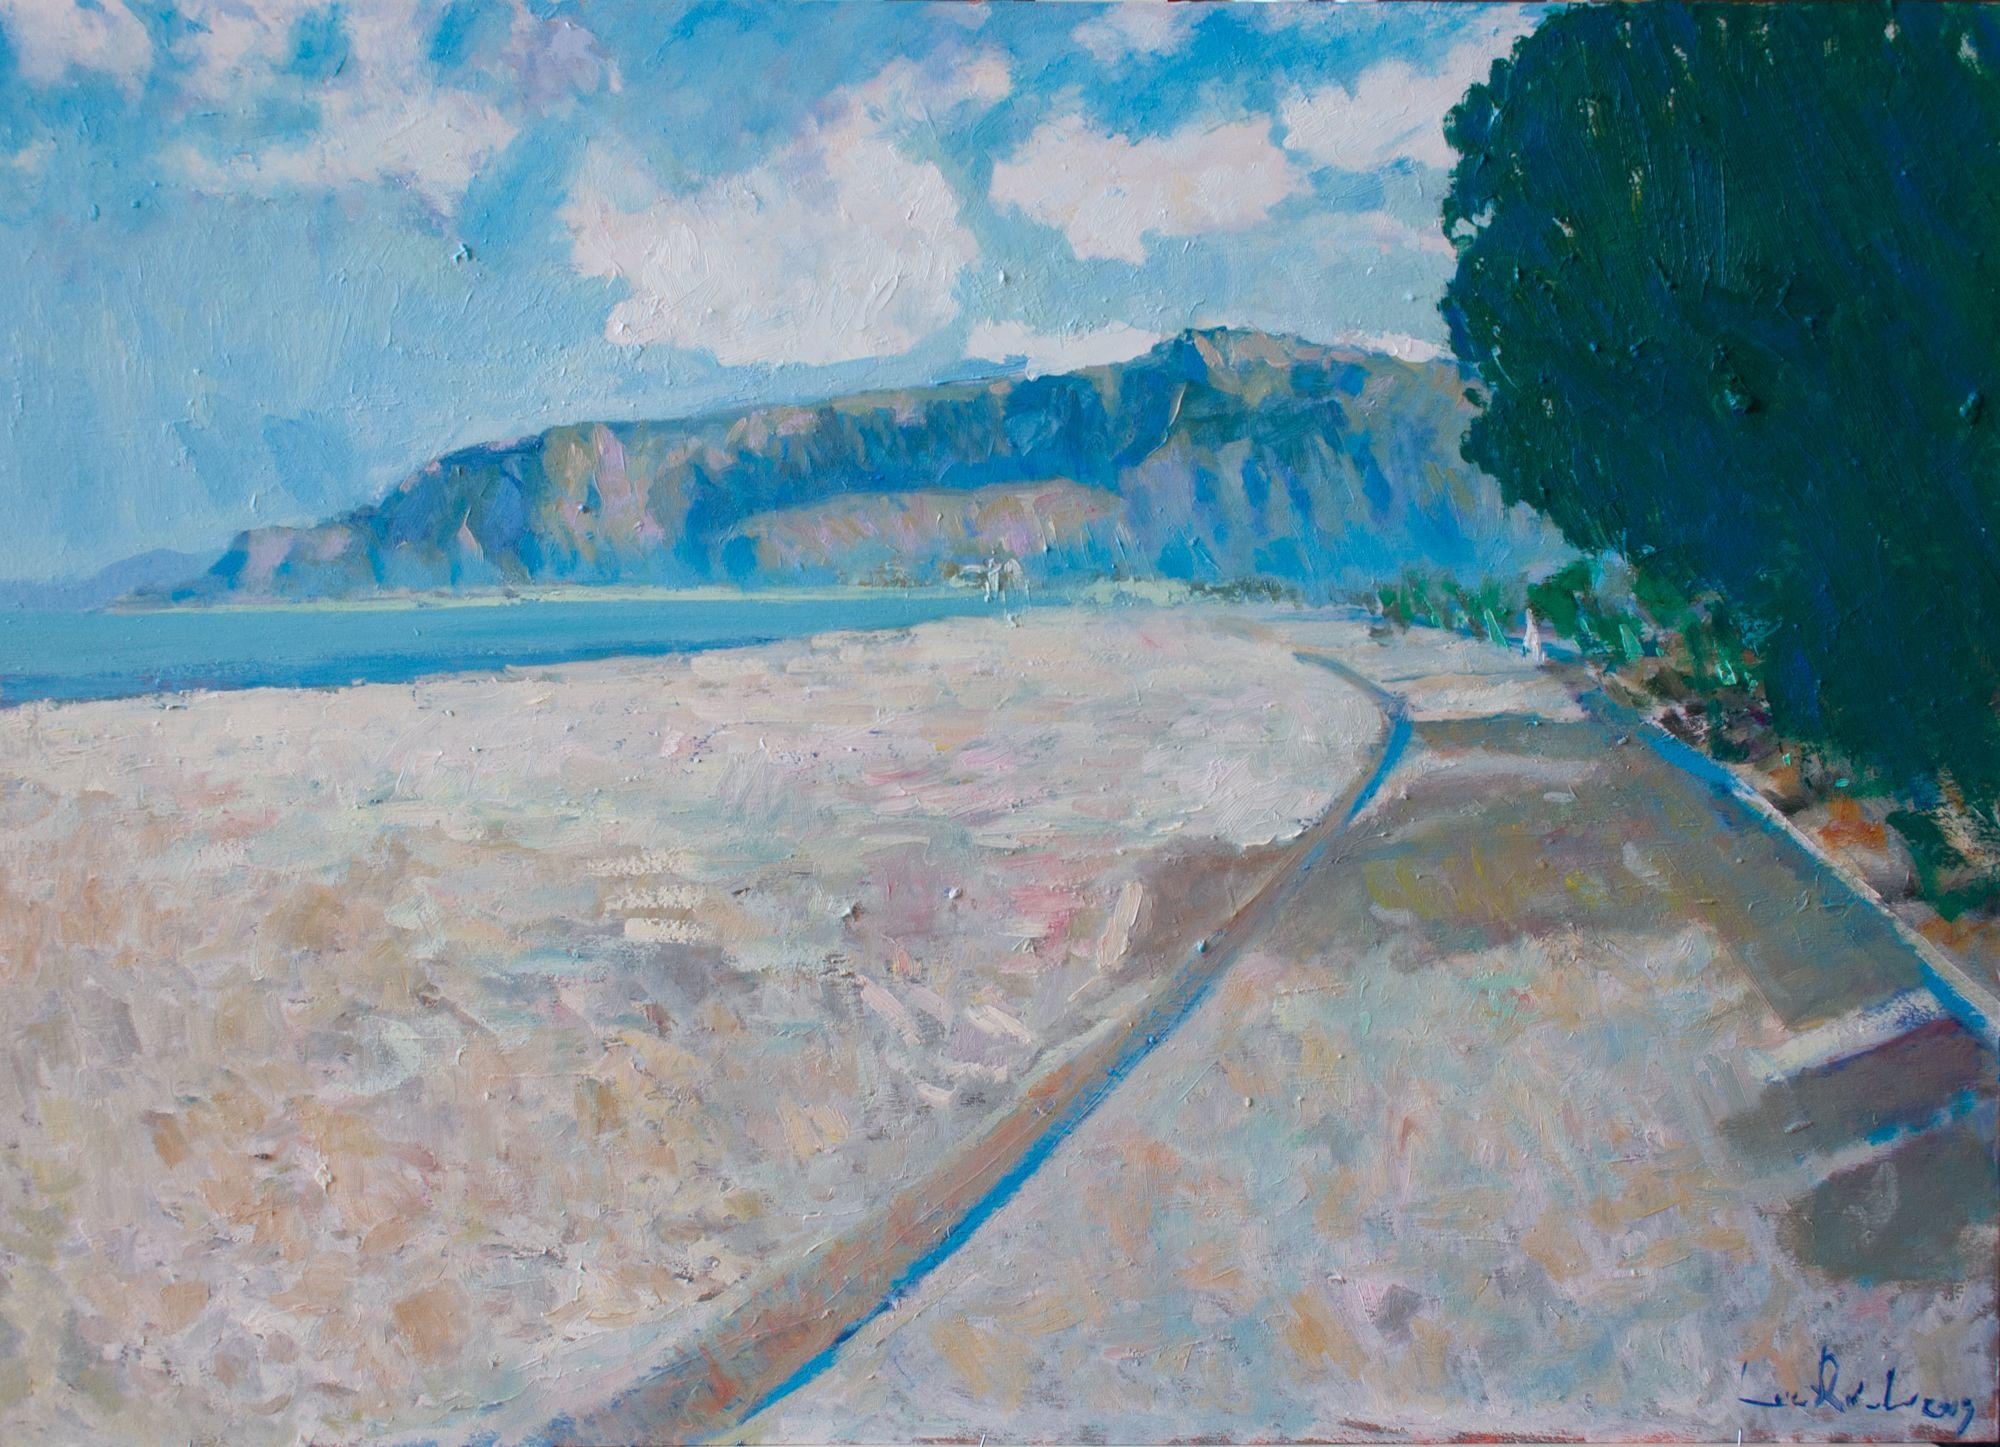 luca raimondi Landscape Painting - Mondello beach at evening, Painting, Oil on Wood Panel